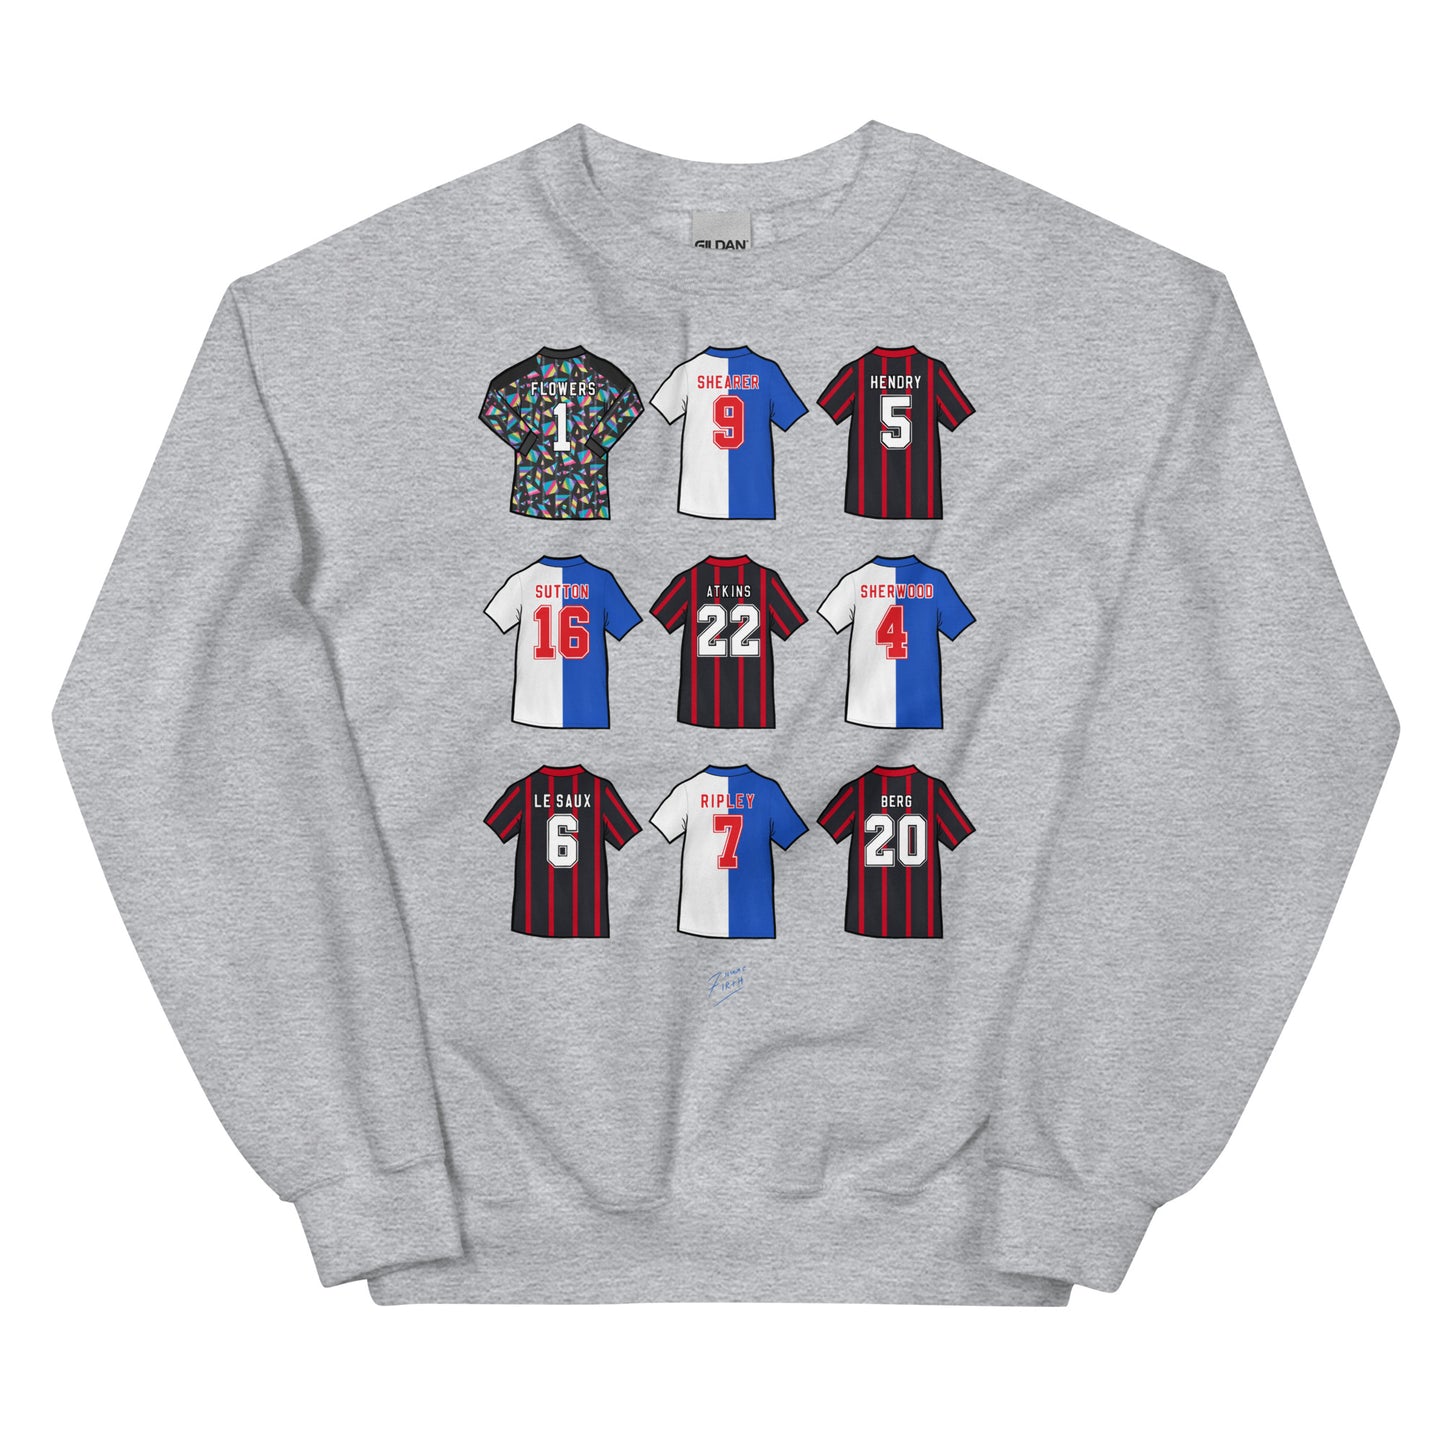 Grey sweatshirt jumper inspired by the Blackburn Rovers side of 1994/95